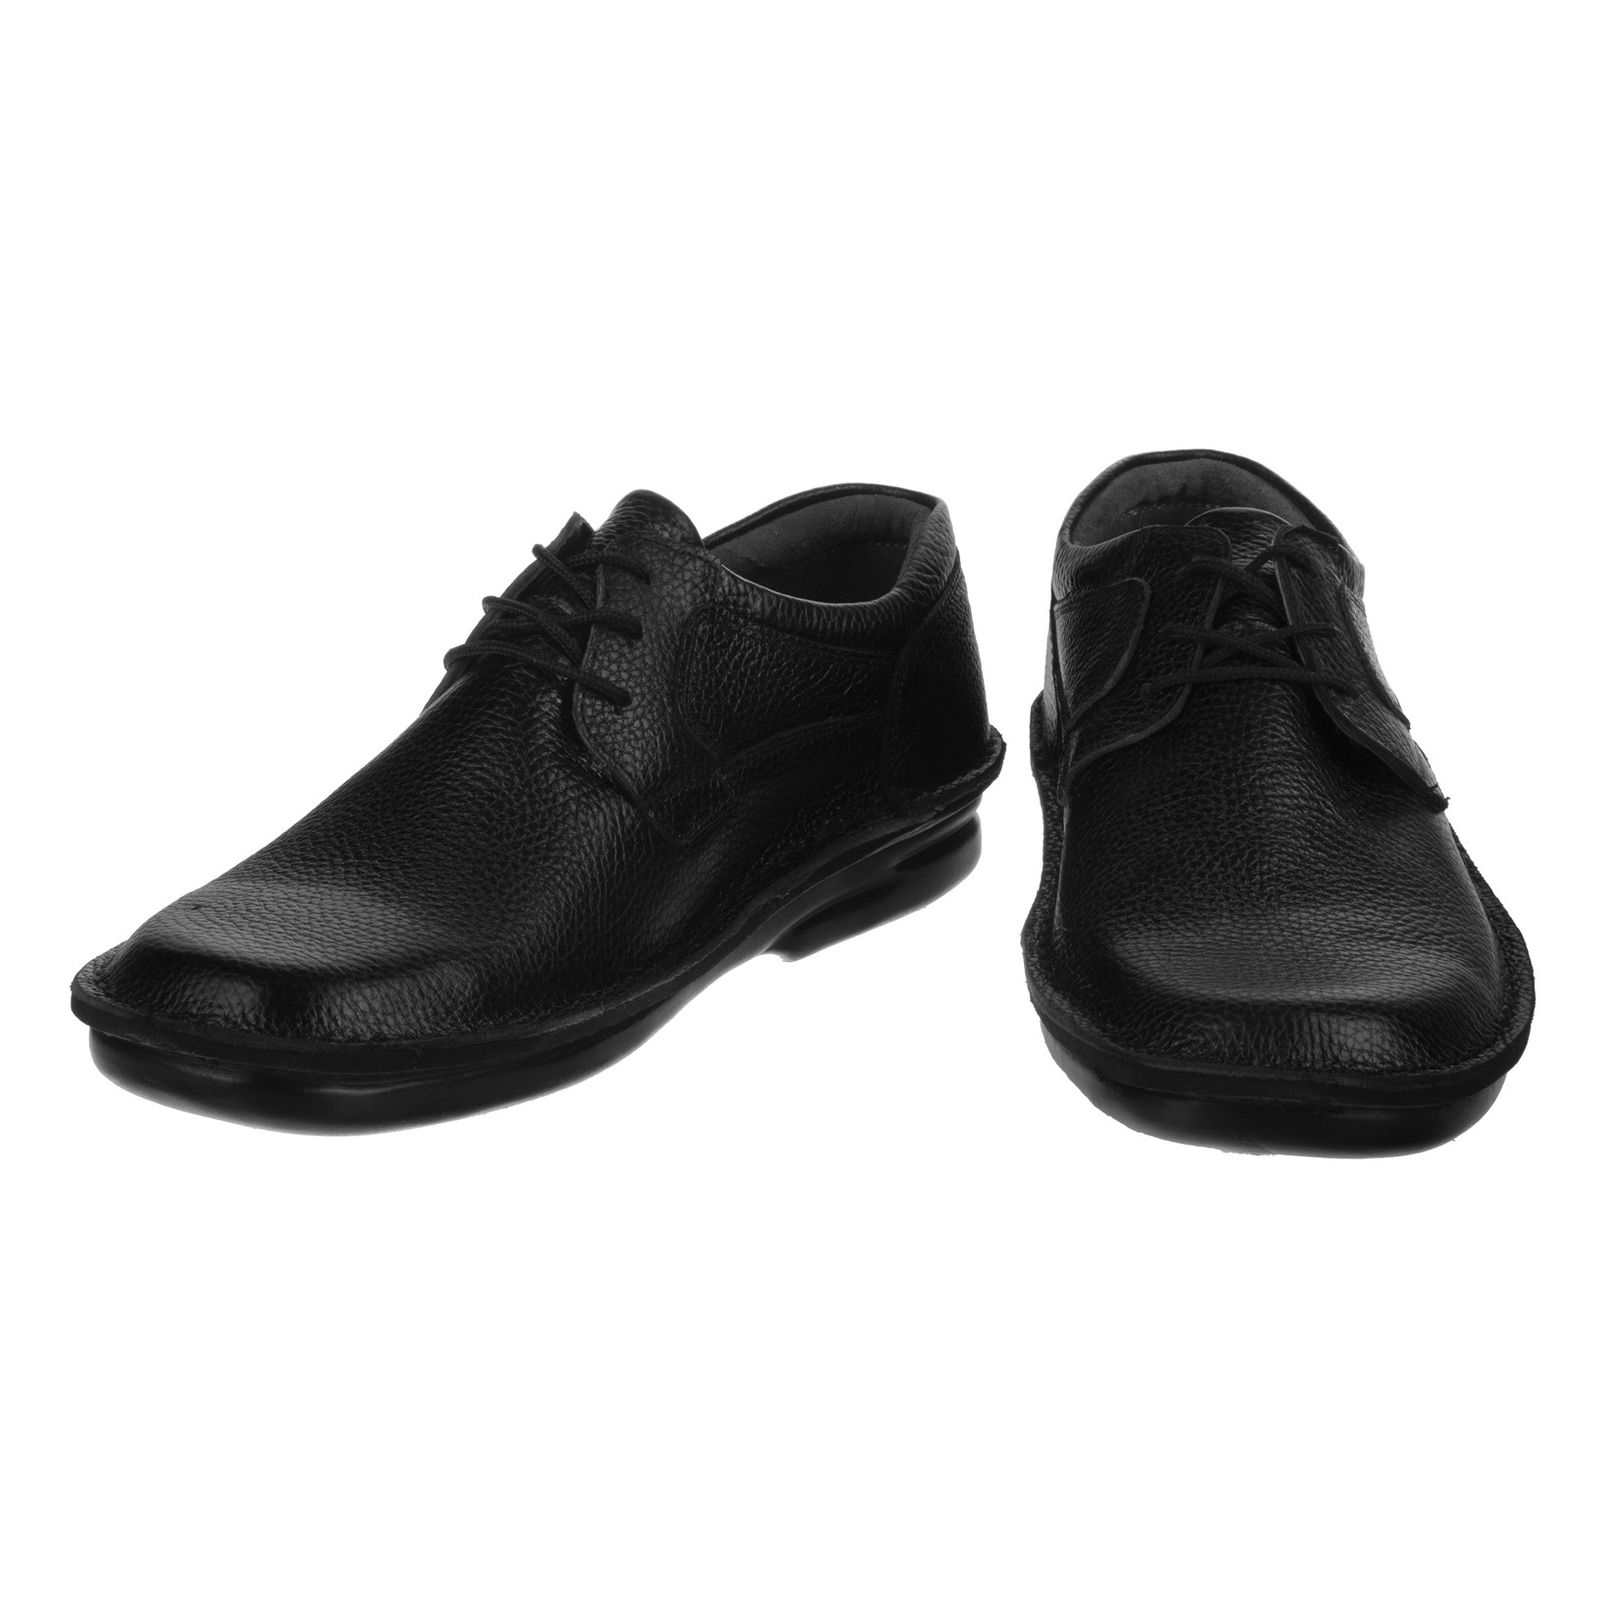 کفش روزمره مردانه شیفر مدل 7011A-101 - مشکی - 5